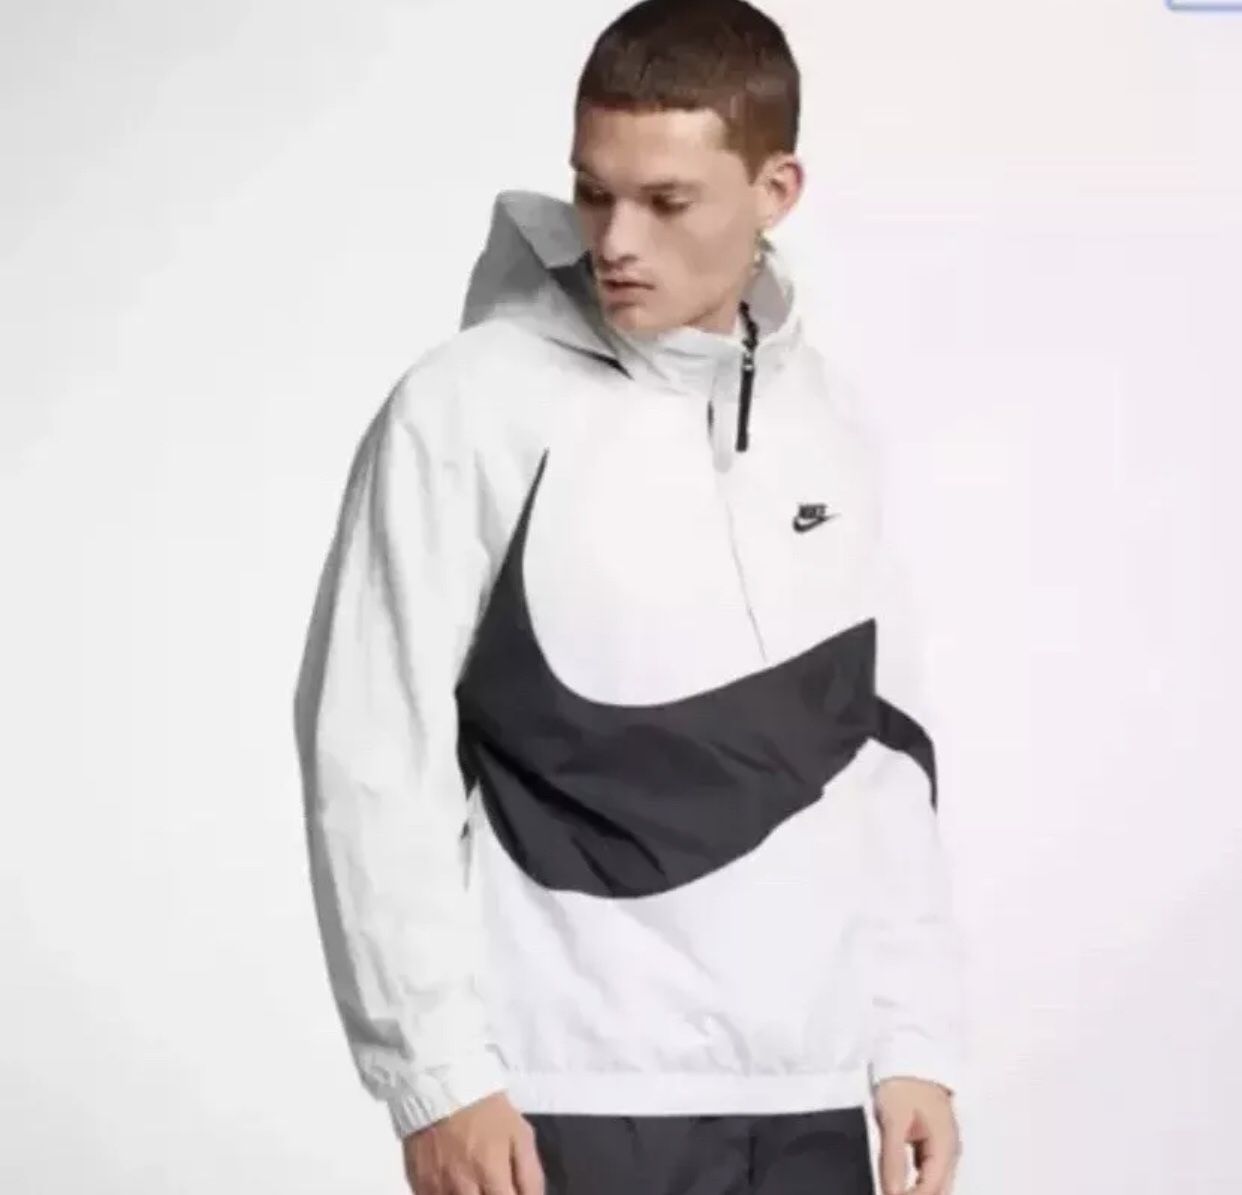 Nike Sportswear Anorak Half Zip Jacket Big Swoosh New MEDIUM for in National City, CA - OfferUp